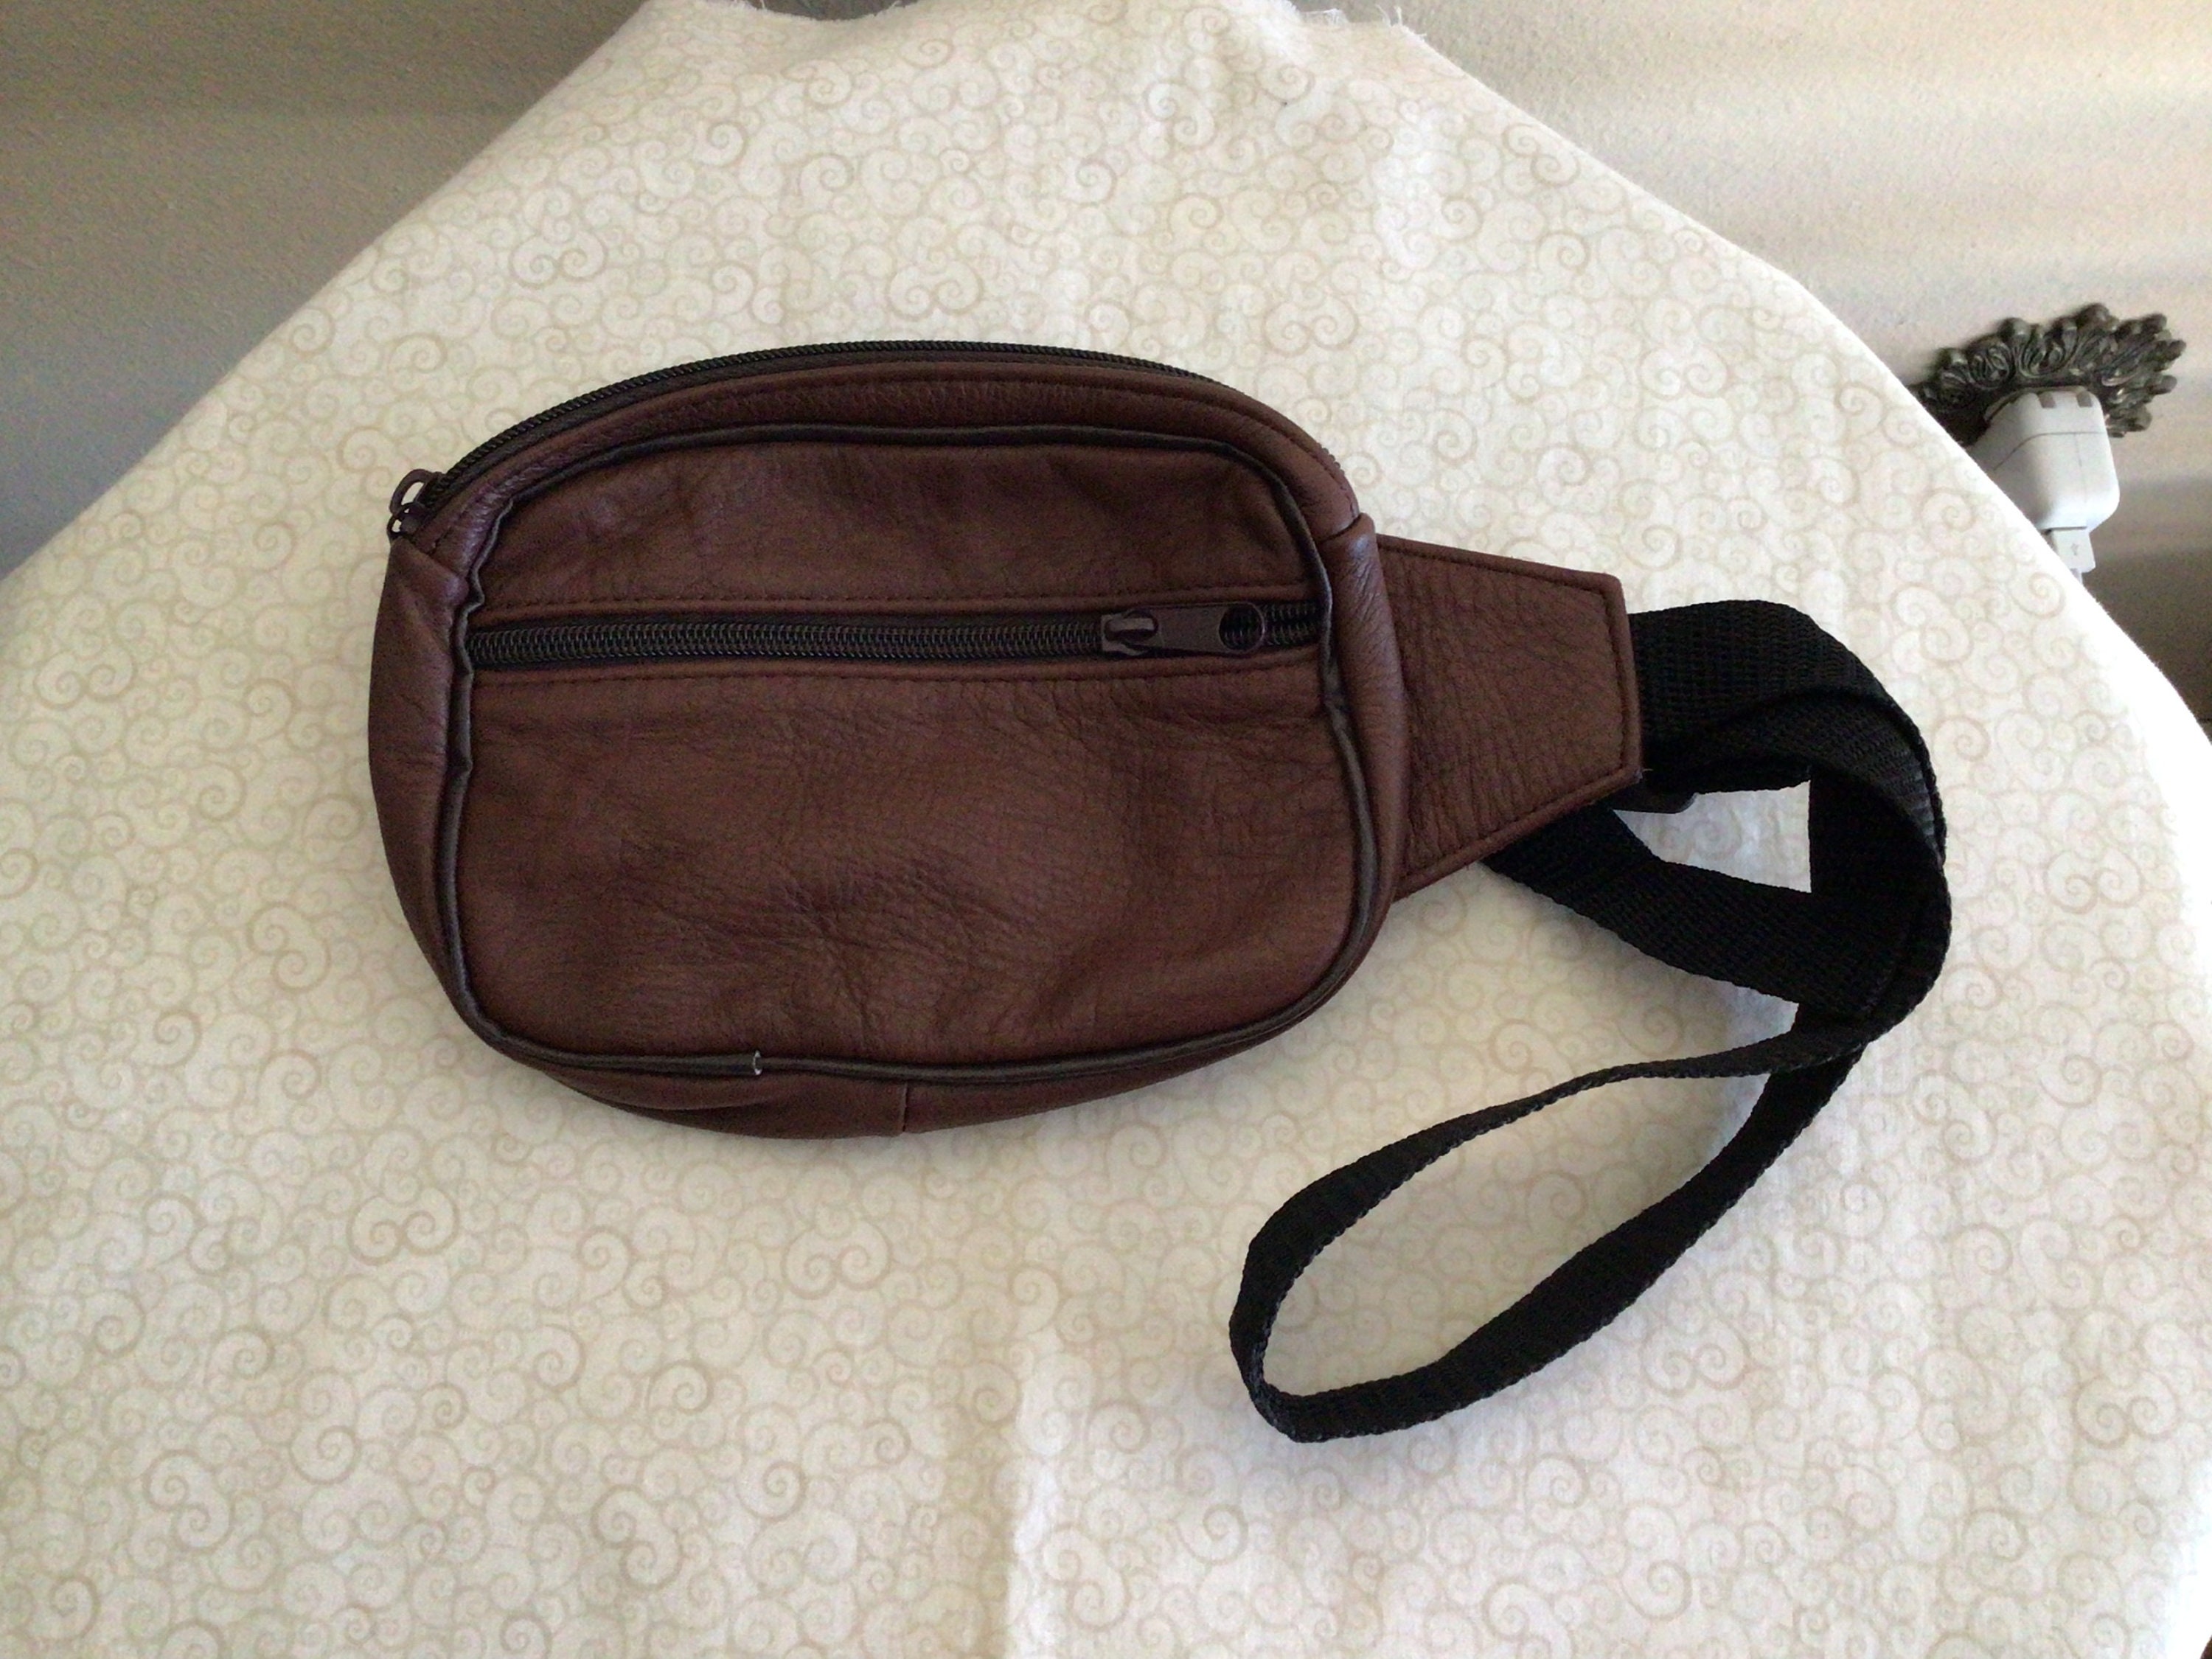 libaire leather handbags